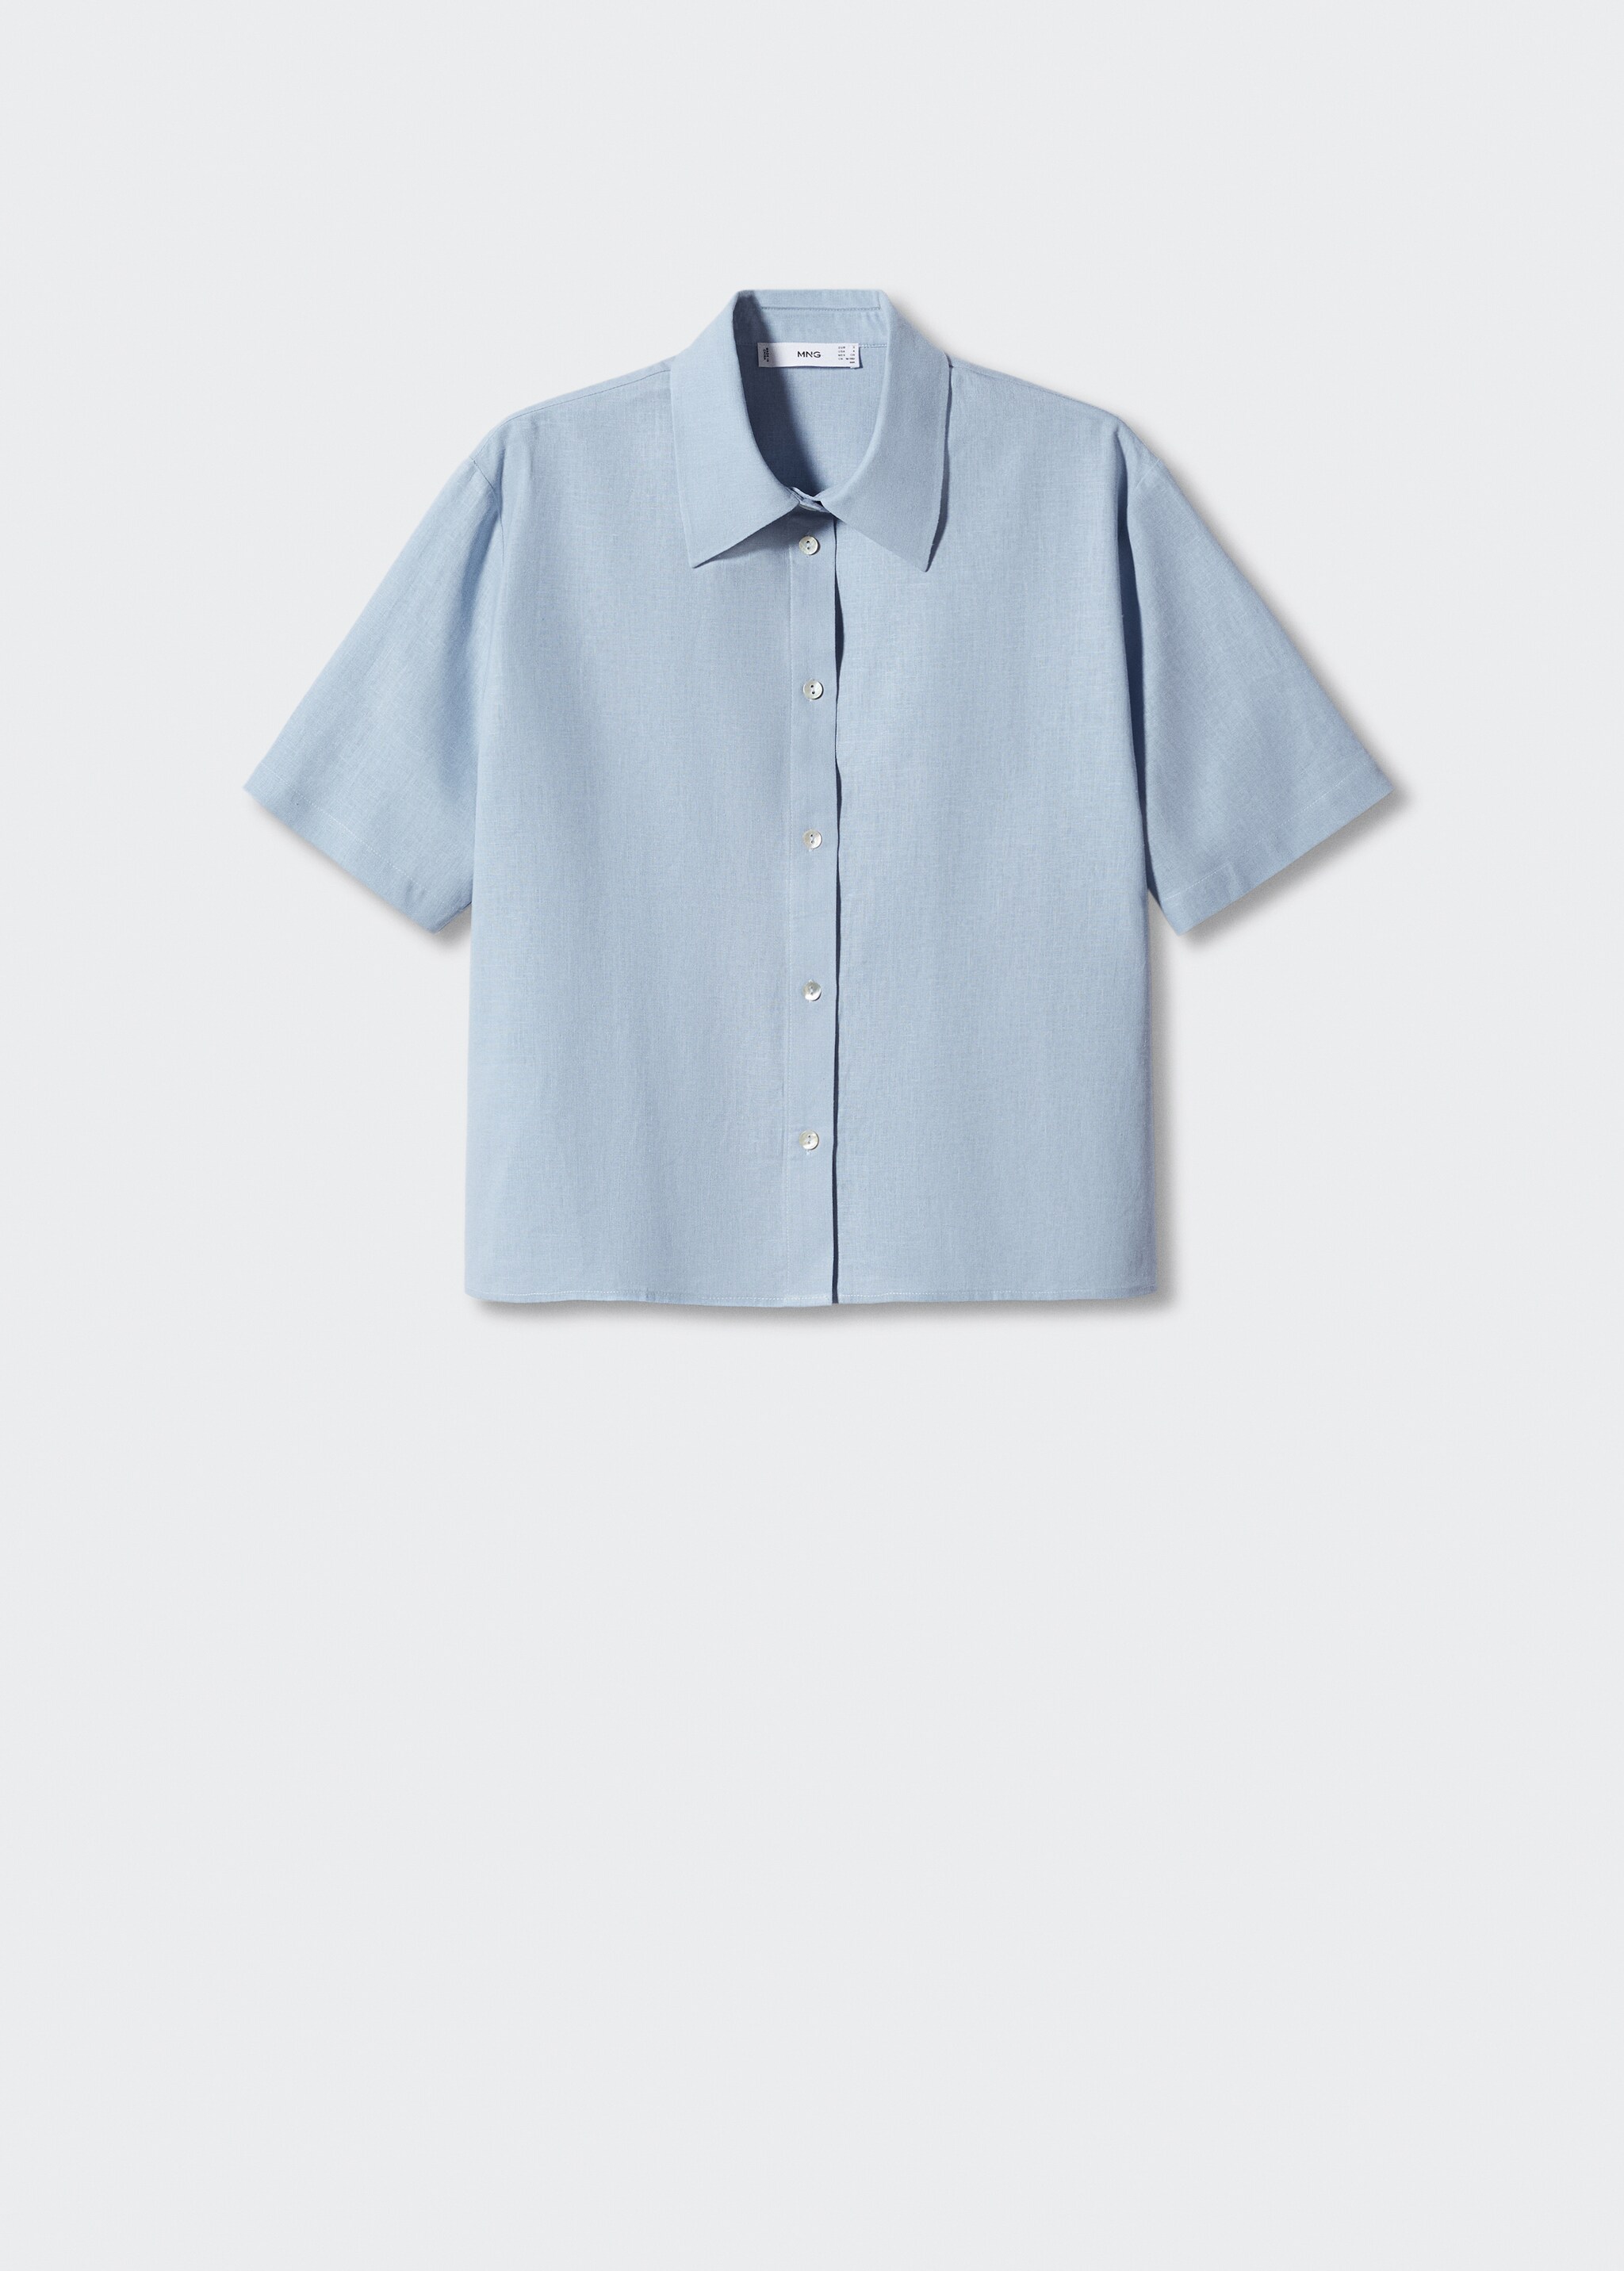 Linen pyjama shirt - Article without model